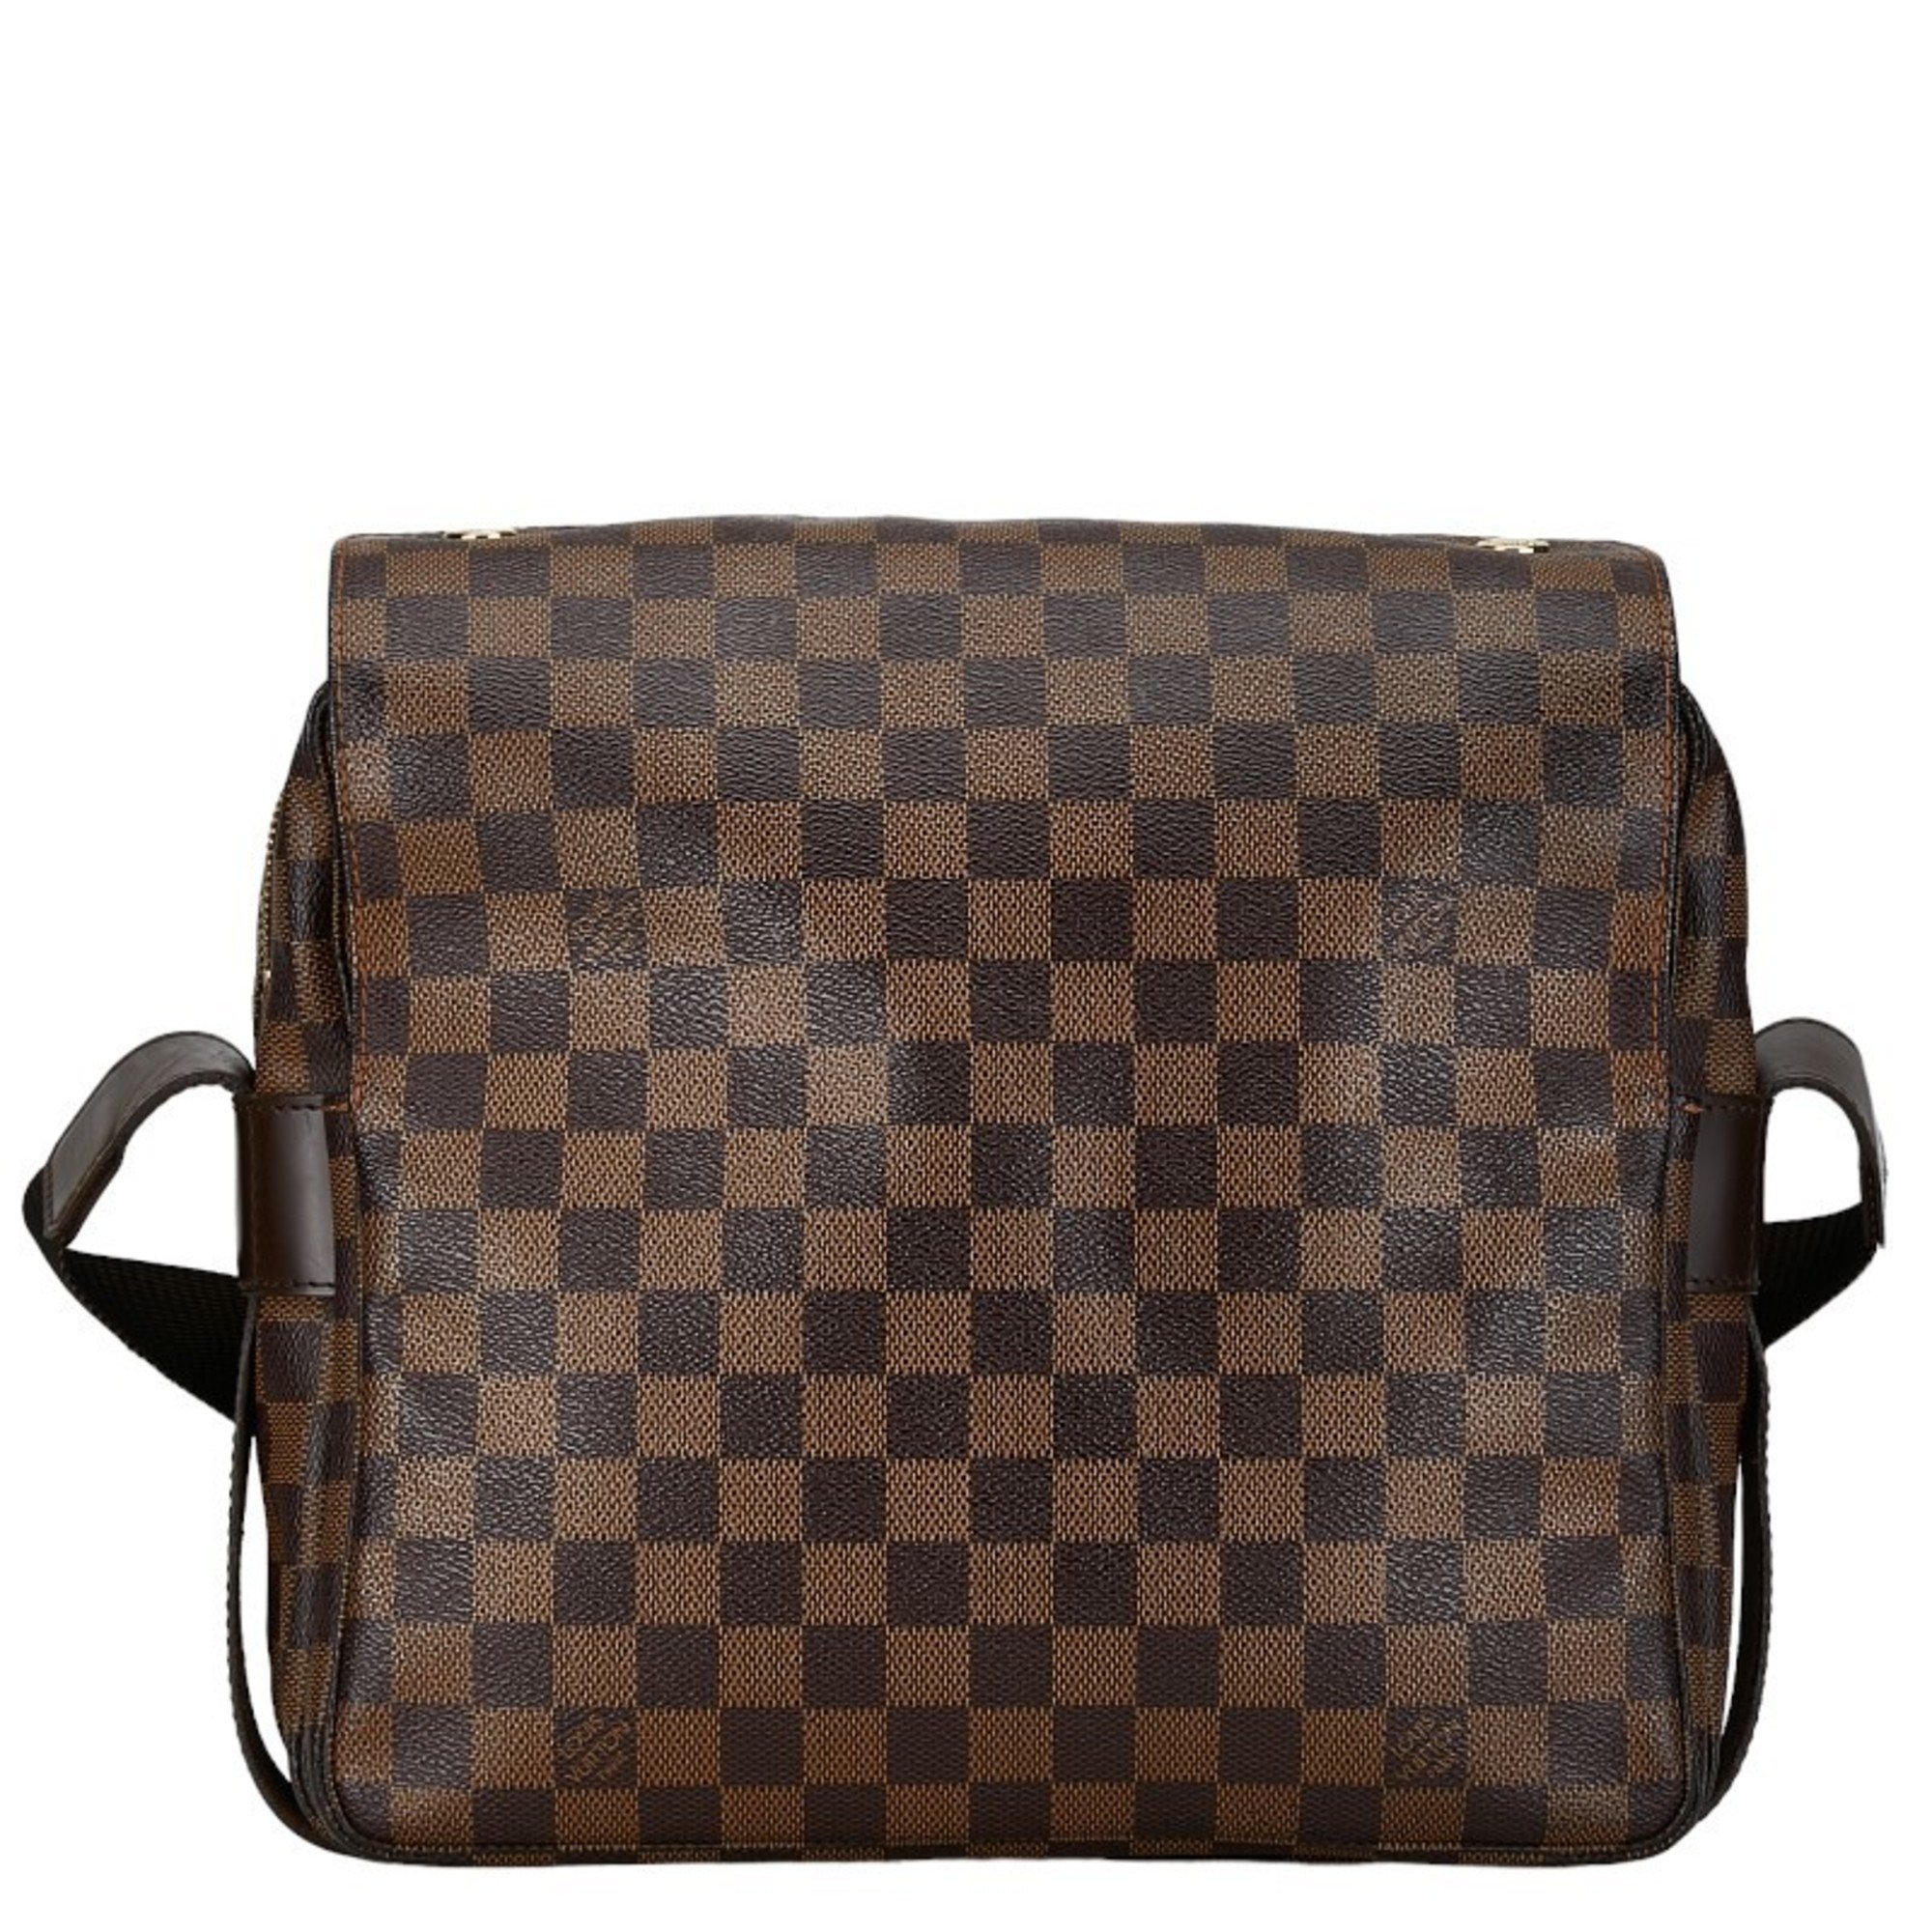 Louis Vuitton Damier Naviglio Shoulder Bag N45255 Brown PVC Leather Women's LOUIS VUITTON